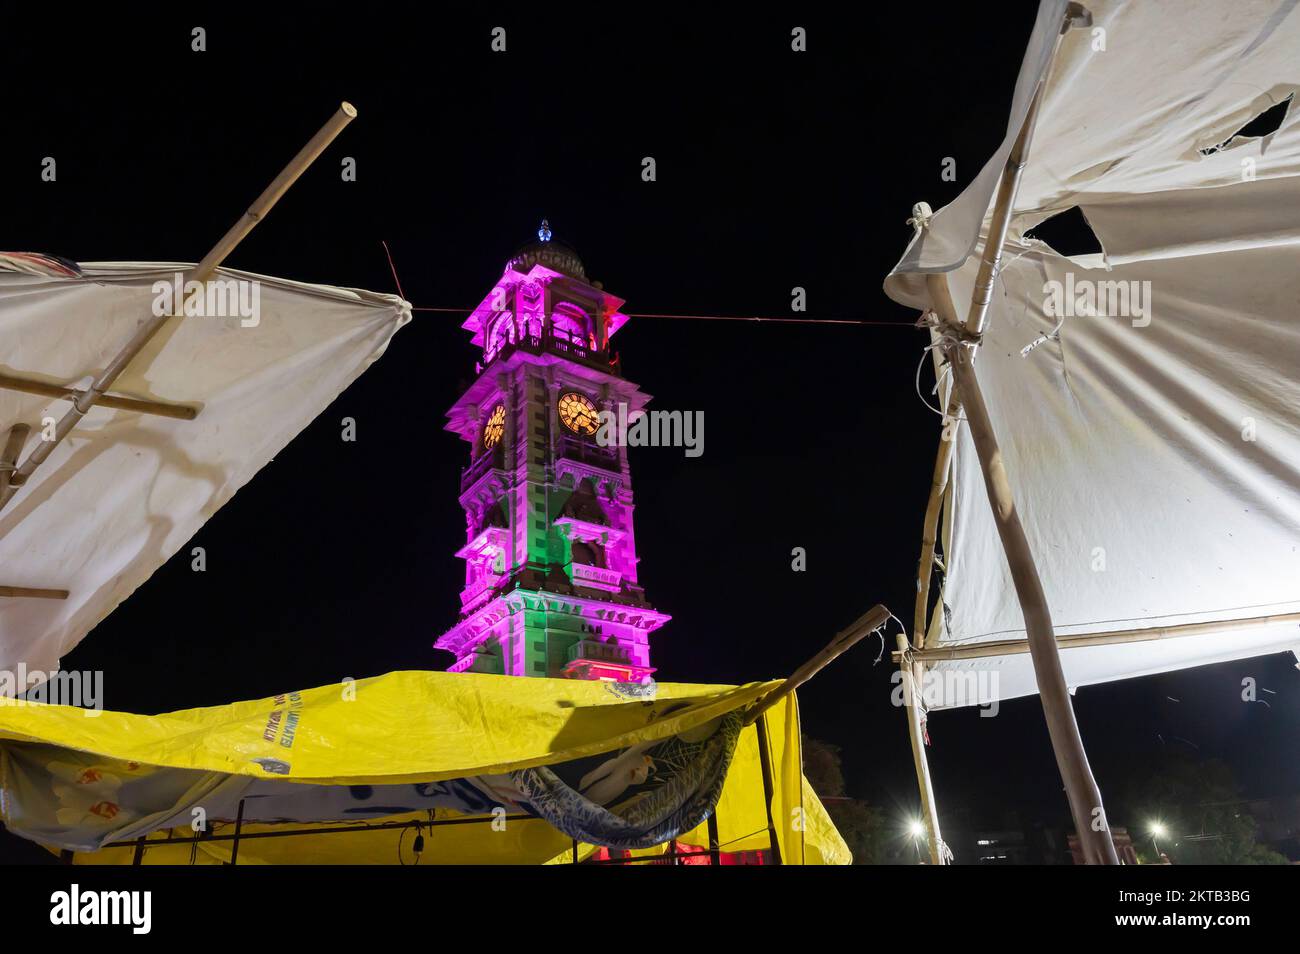 Jodhpur, Rajasthan, India - 18.10.2019 : Famous Sardar Market and Ghanta ghar Clock tower at night in Jodhpur, Rajasthan, India. Market place in foreg Stock Photo